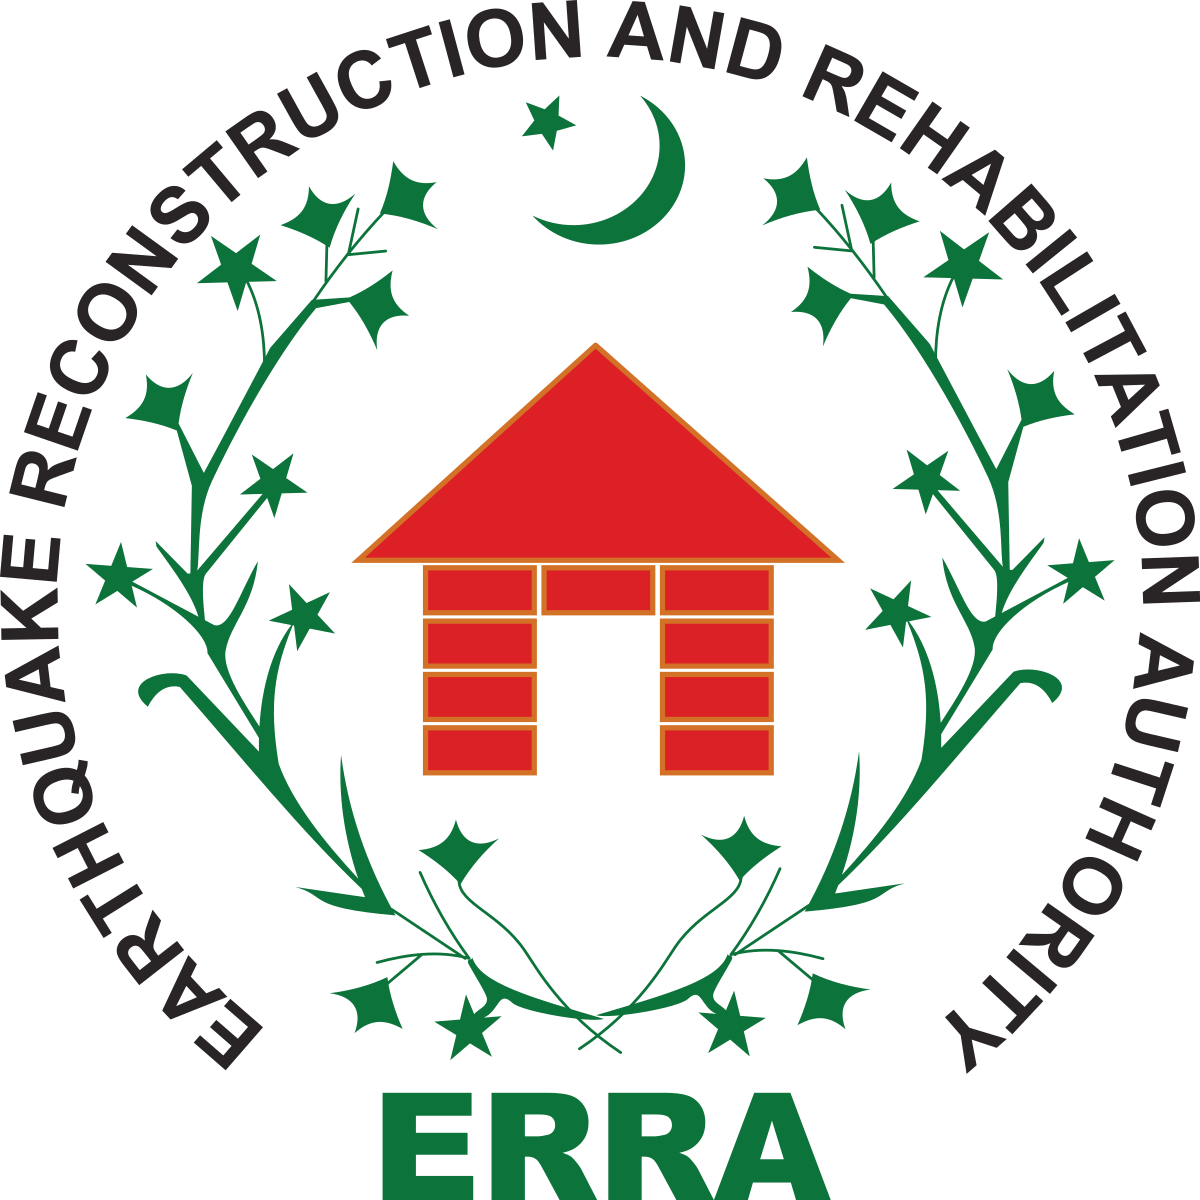 Earthquake Reconstruction and Rehabilitation Authority - Wikipedia